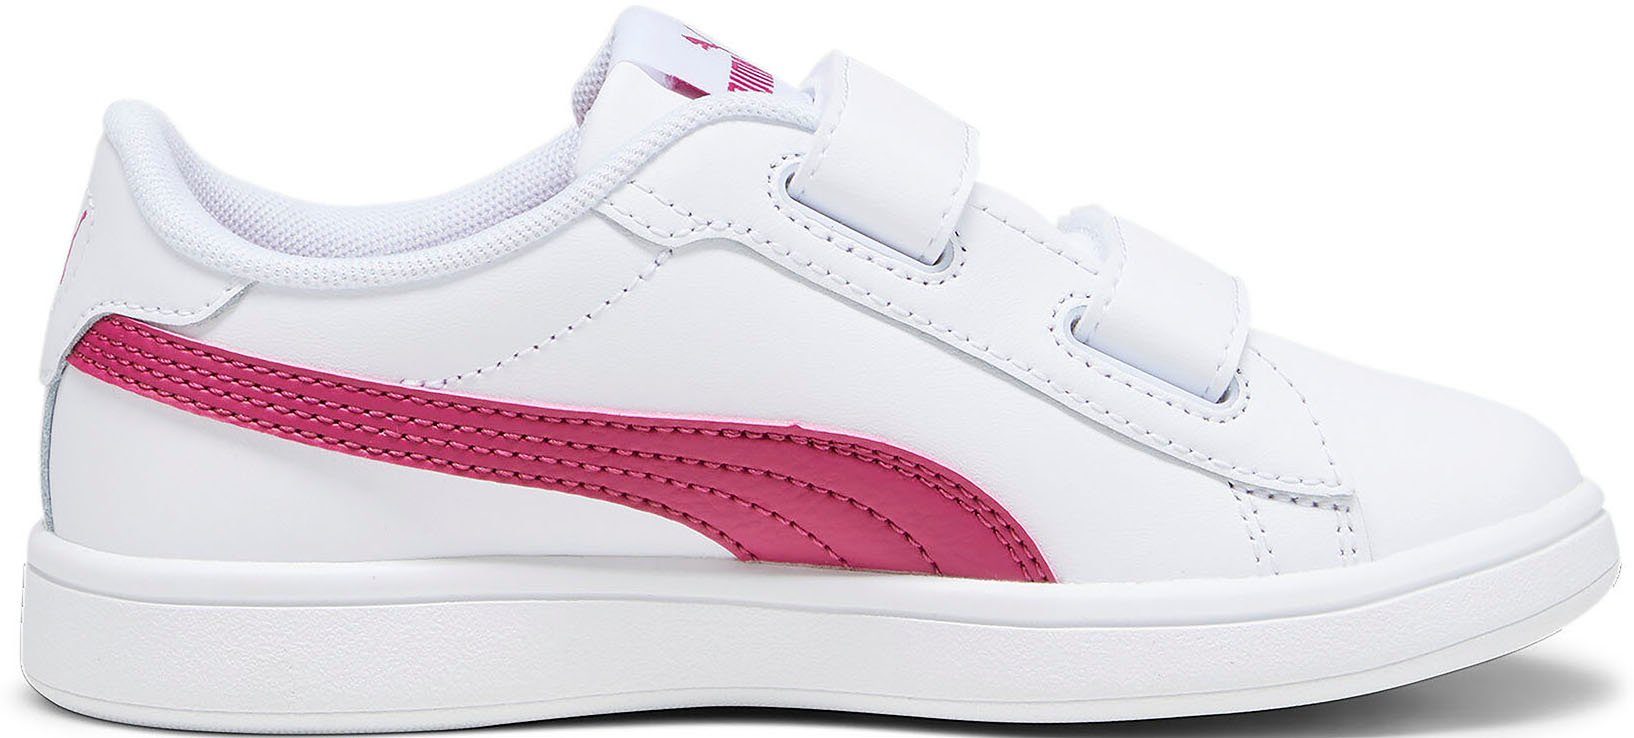 mit PUMA V Klettverschluss 3.0 White-Pinktastic PUMA L PS SMASH Sneaker